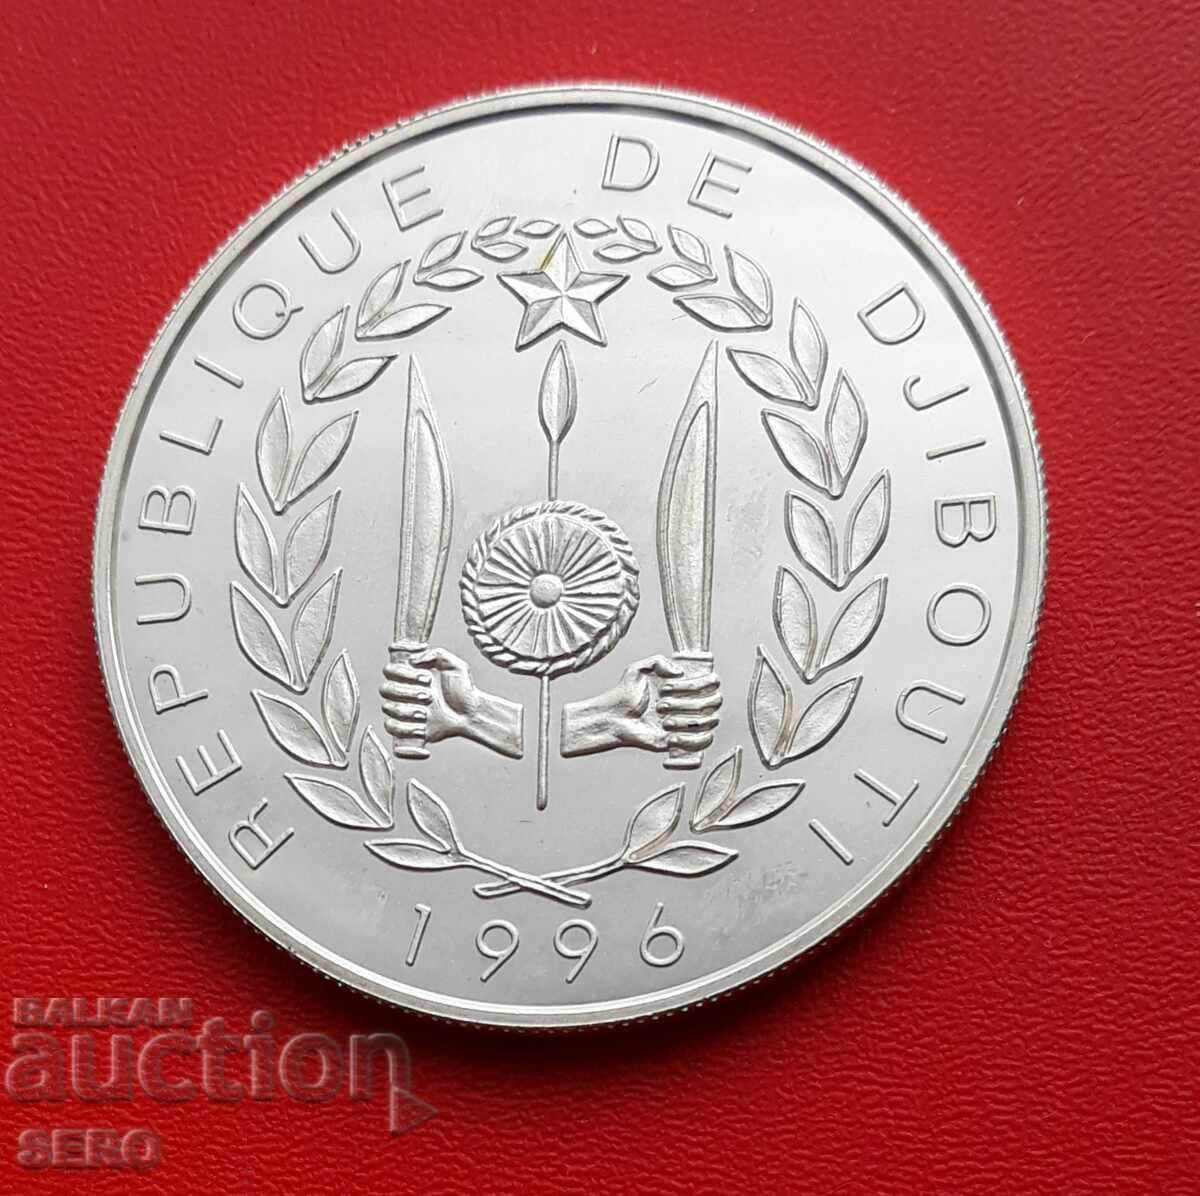 Djibouti-100 franci 1996-argint-foarte rar-tir-15000 buc.